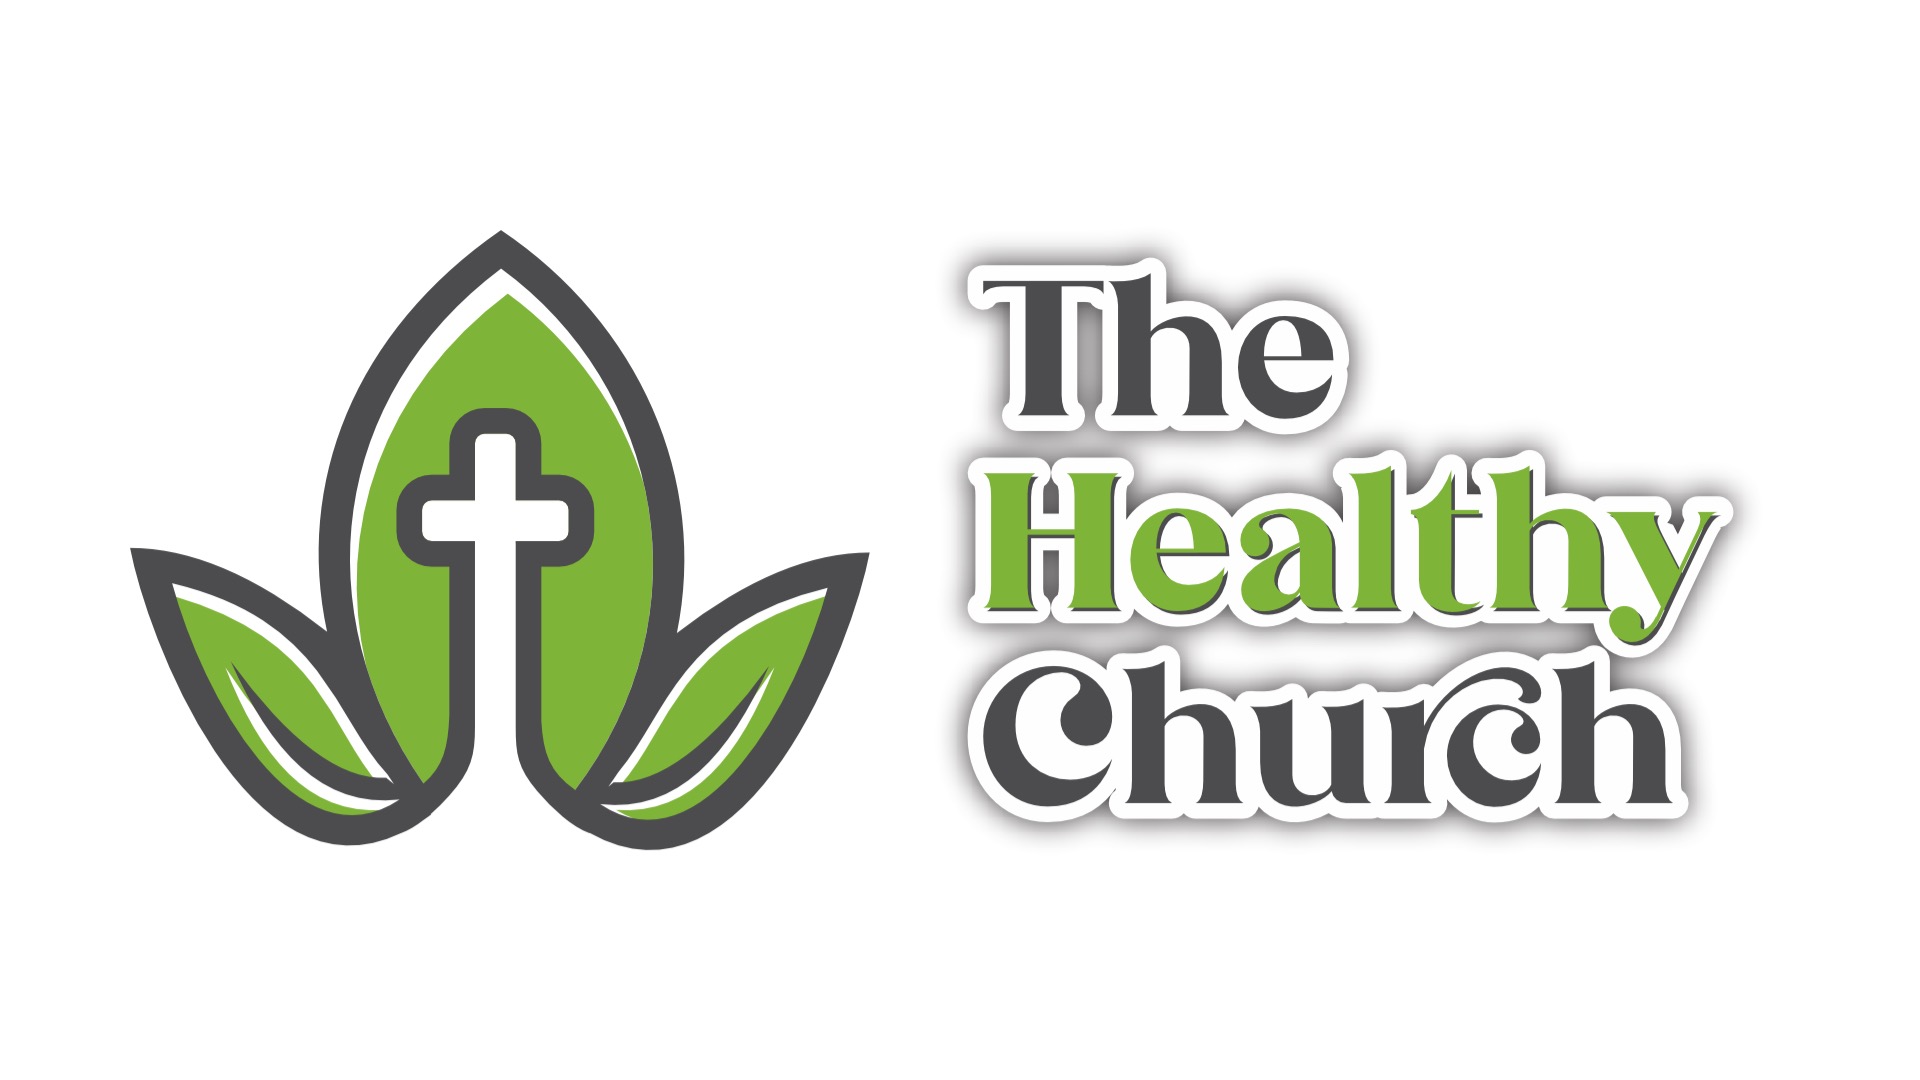 The Healthy Church Spiritual Gifts